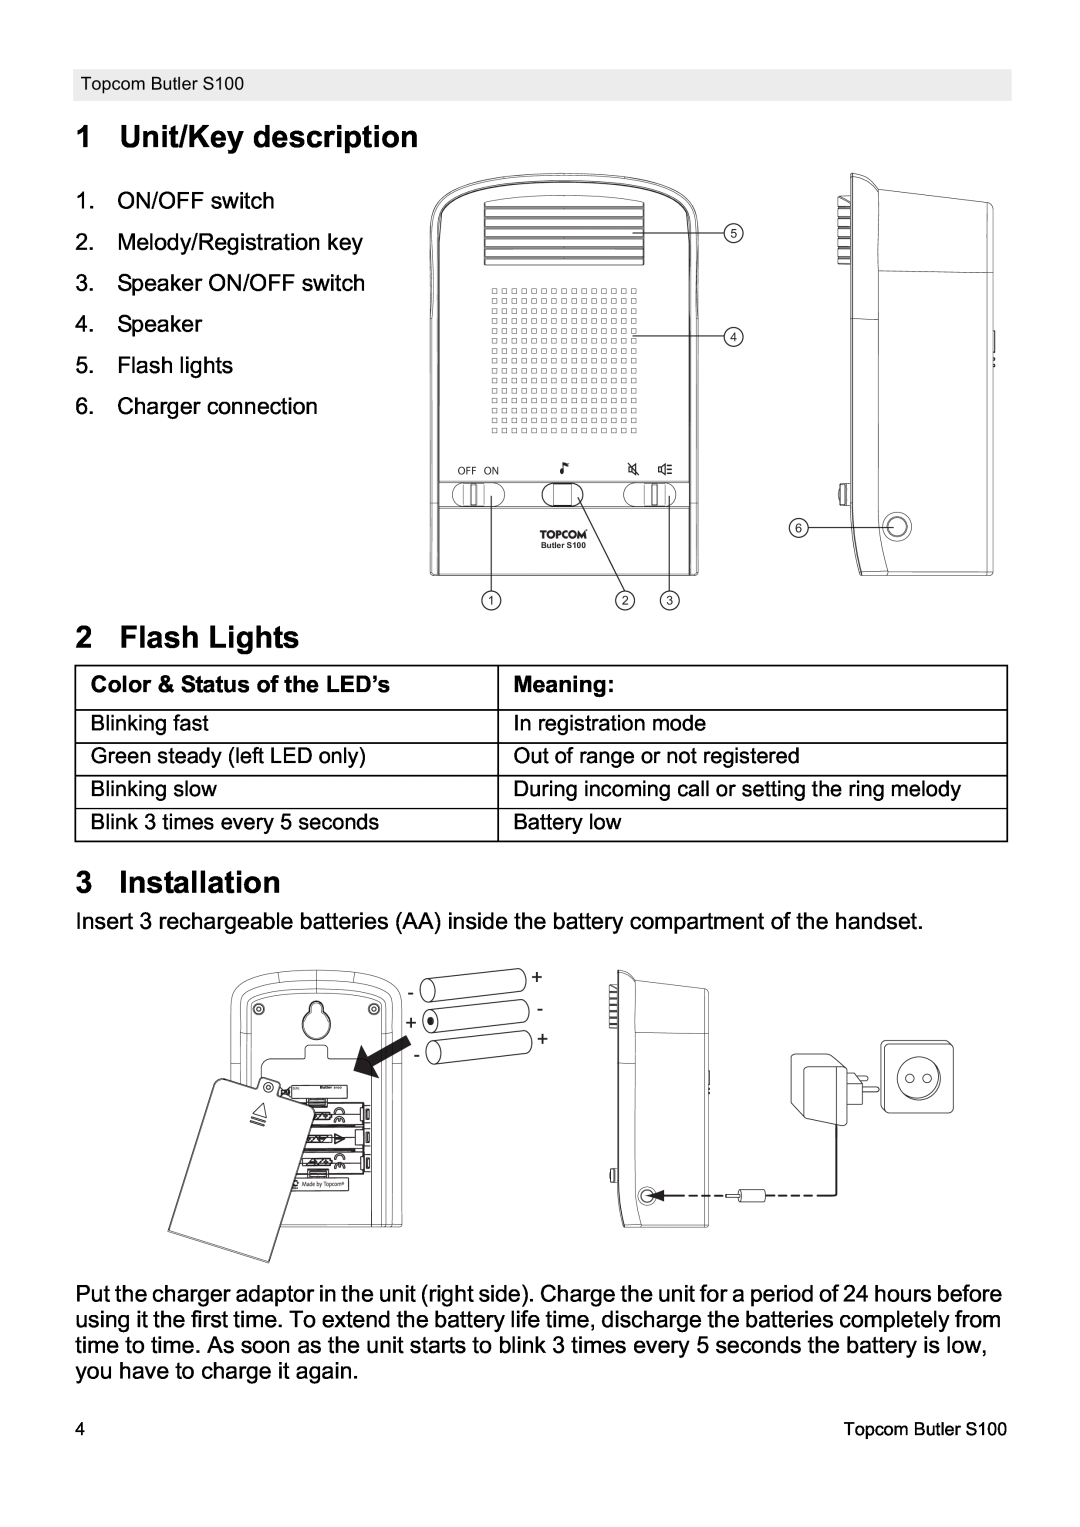 Topcom S100 manual do utilizador Unit/Key description, Flash Lights, Installation, Color & Status of the LED’s, Meaning 